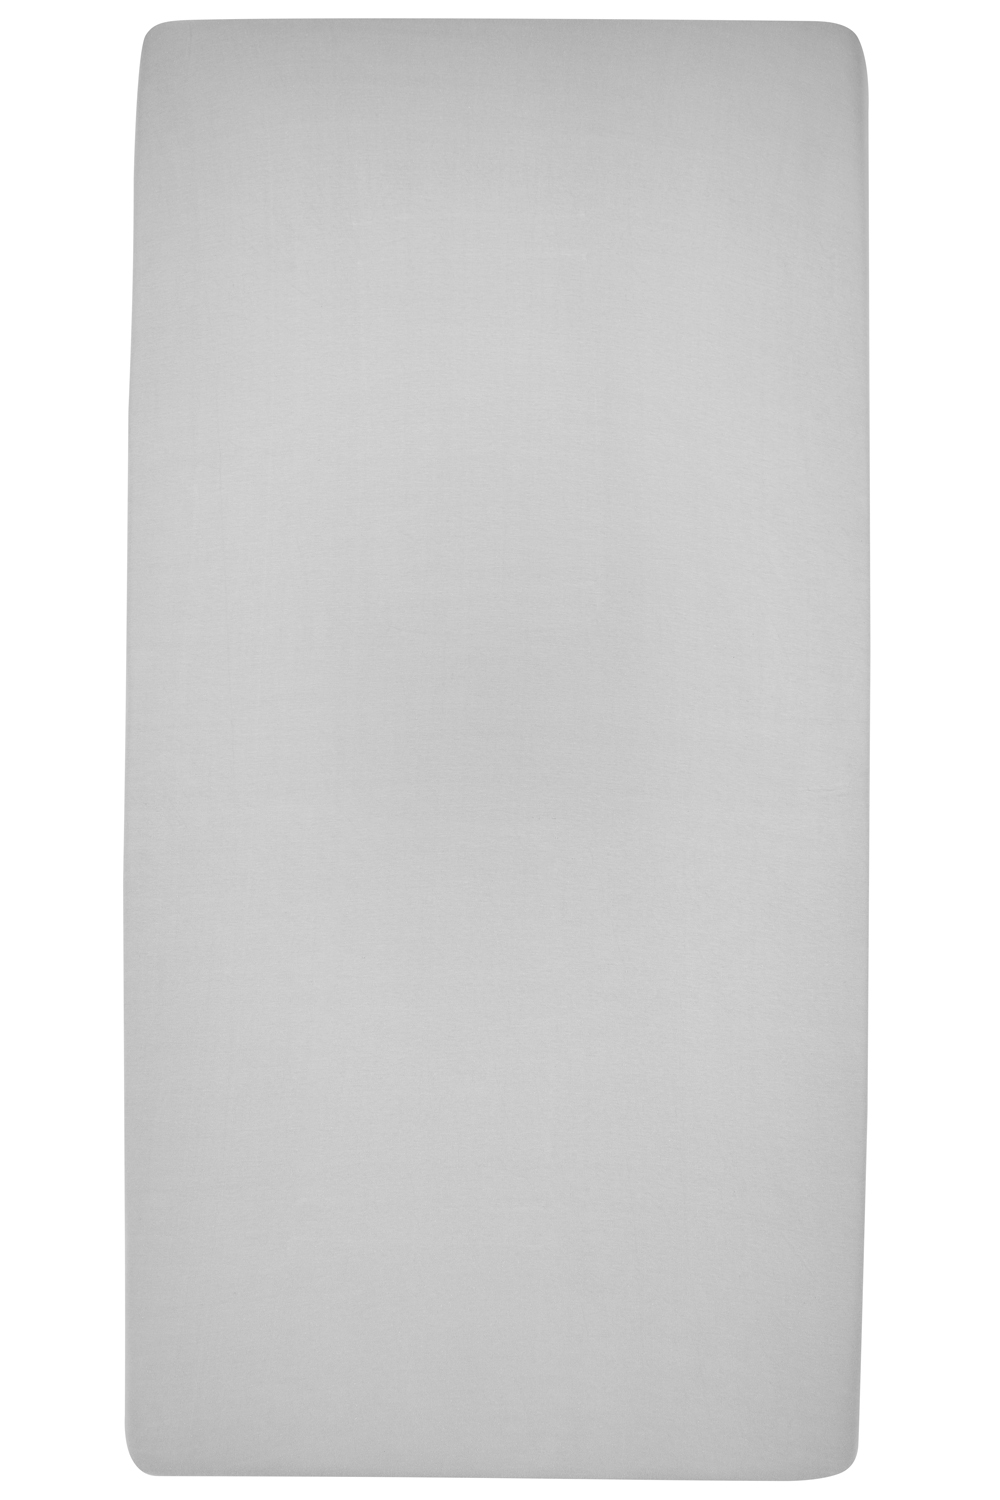 Jersey Hoeslaken - Lichtgrijs - 60x120cm